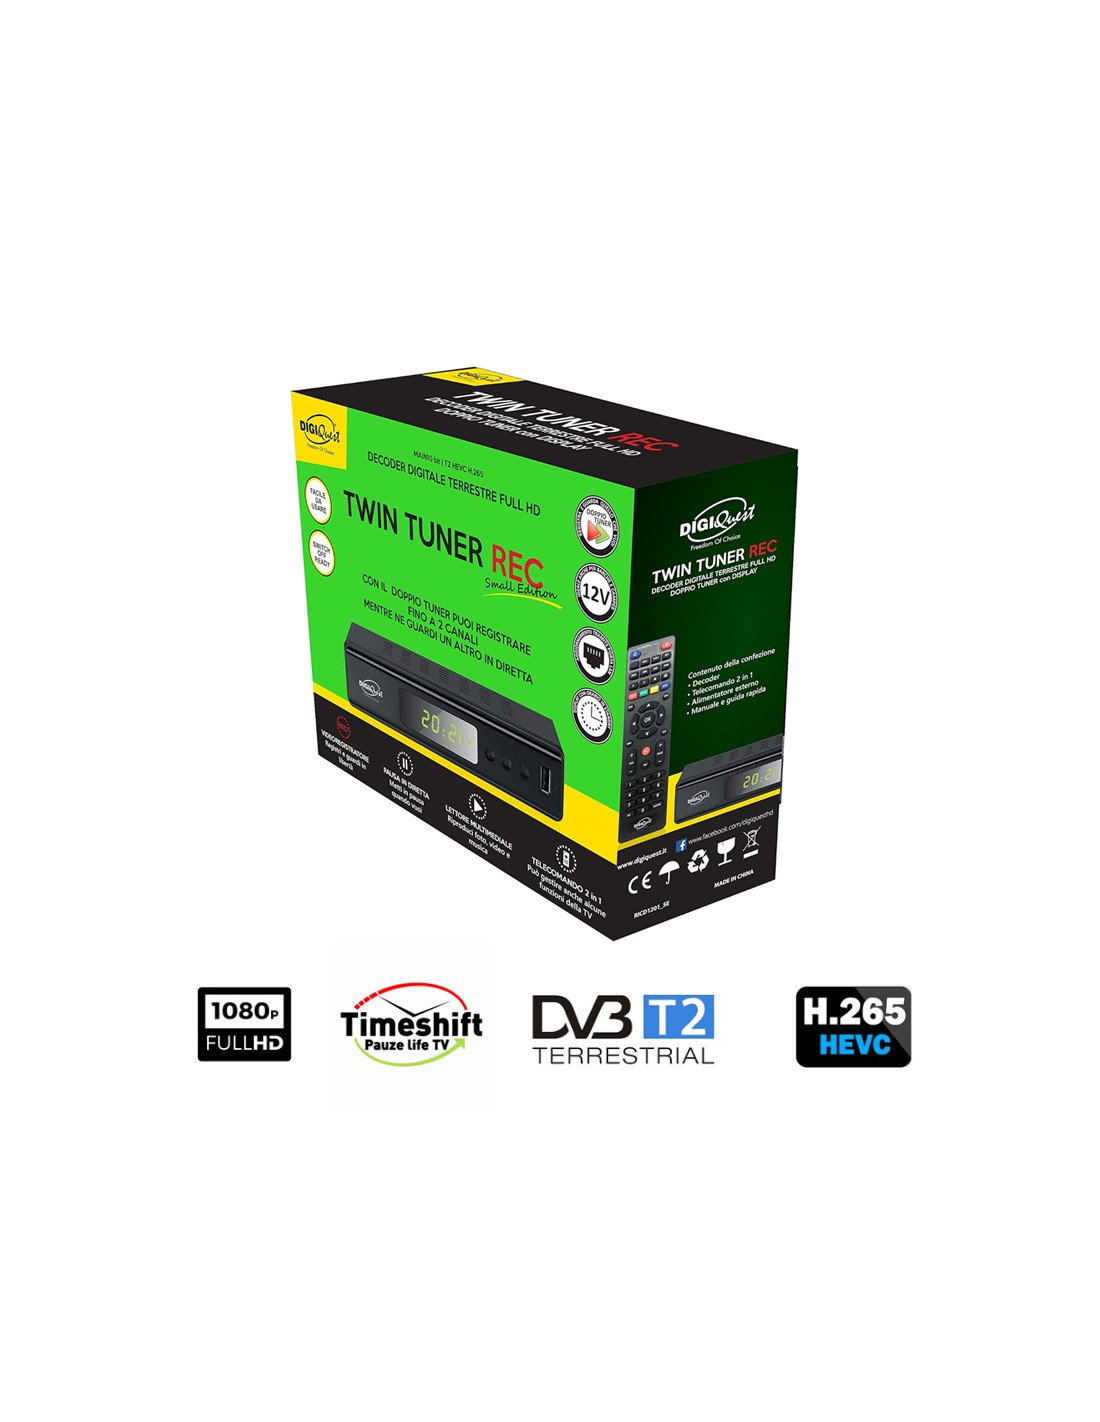 Disco duro multimedia de 3TB - GigaTV HD835 T, Doble sintonizador TDT, 1080p